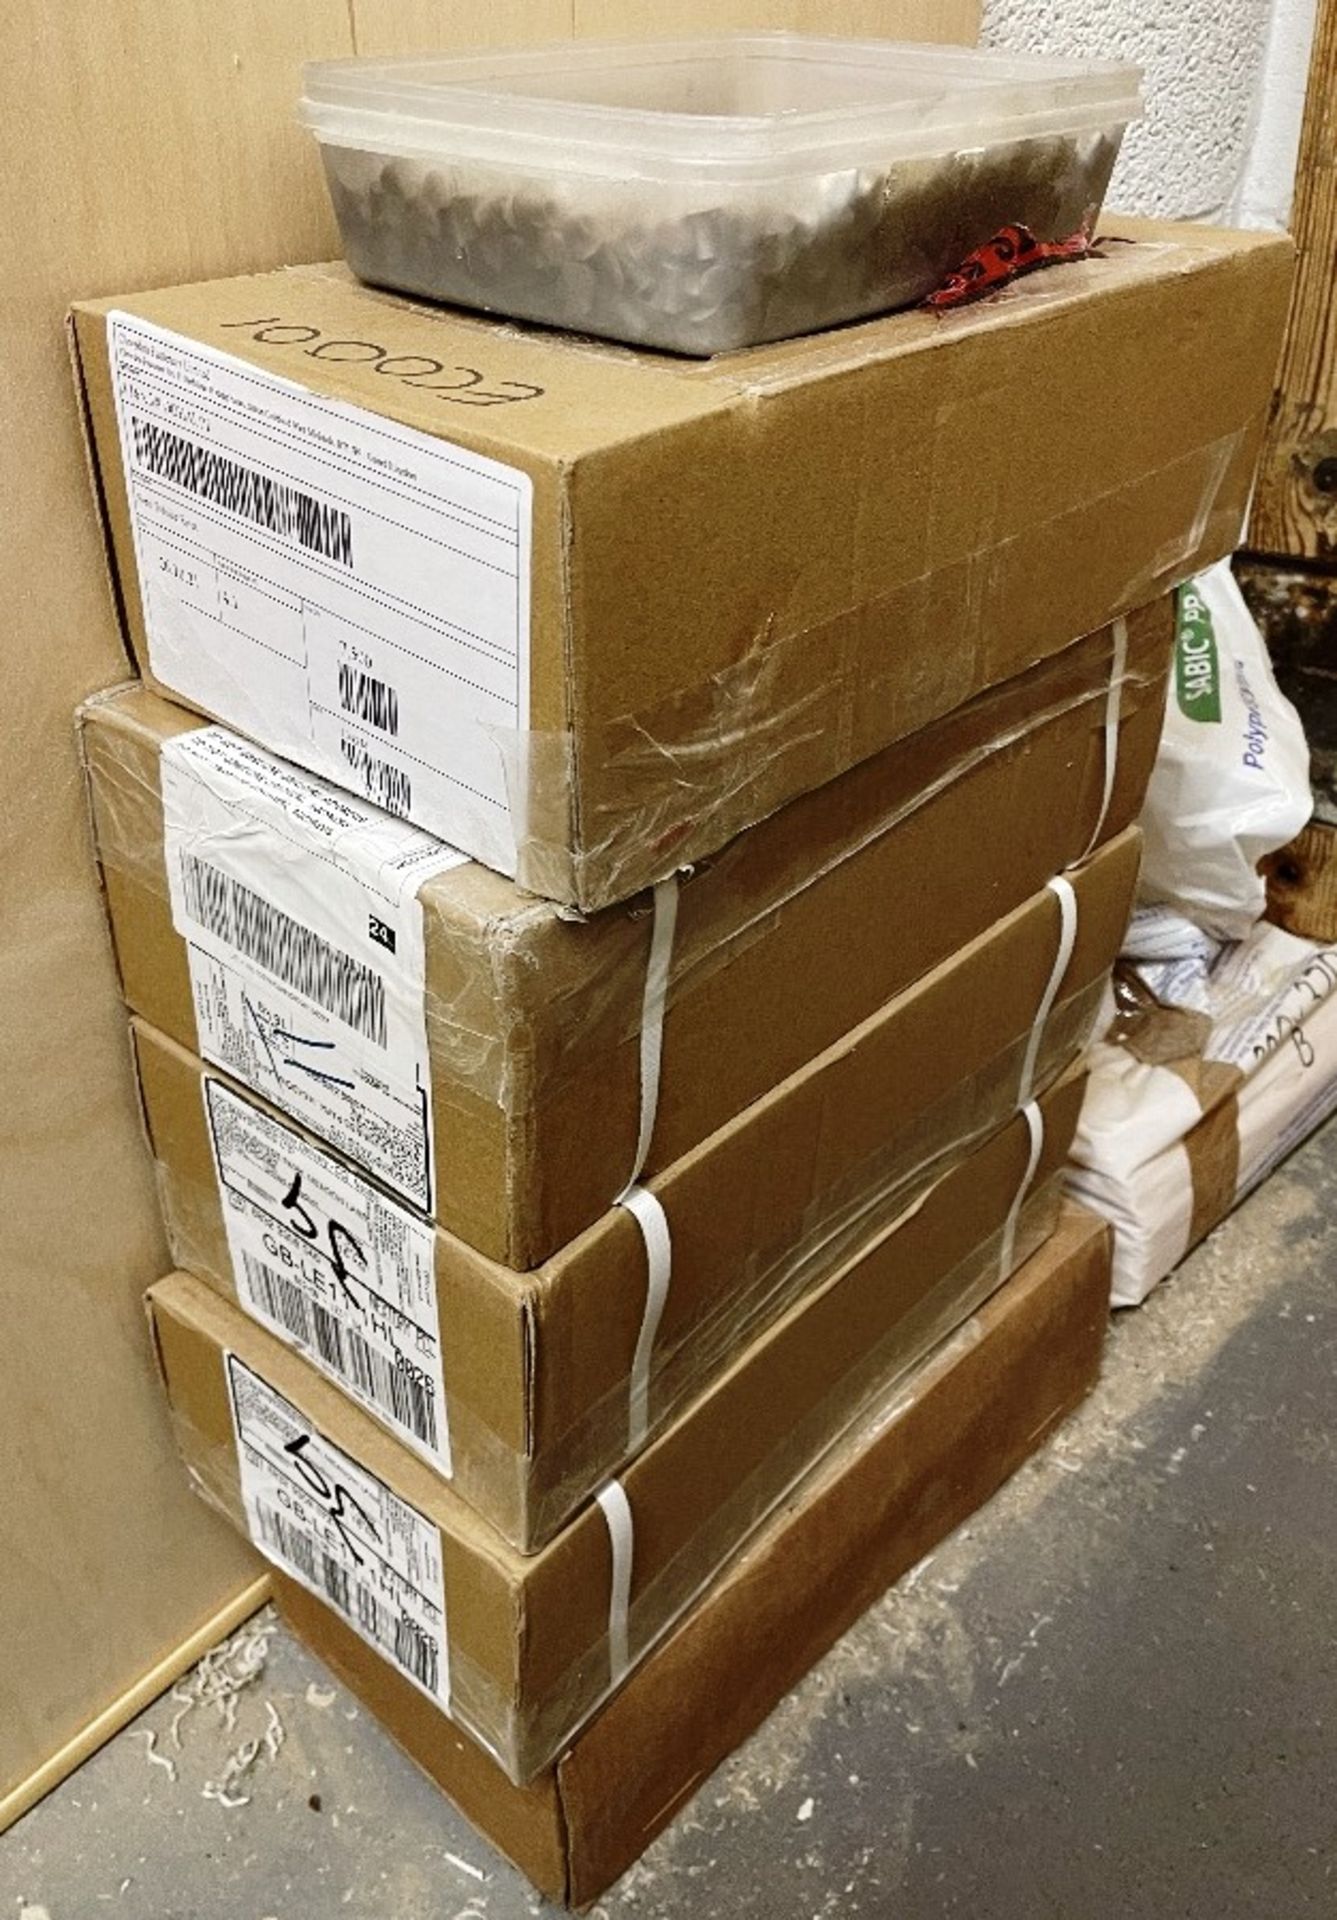 5 x Boxes of Semi Tubular Rivets - 3/16 x 3/8 OOHALPT | Approx. Qty 37,500